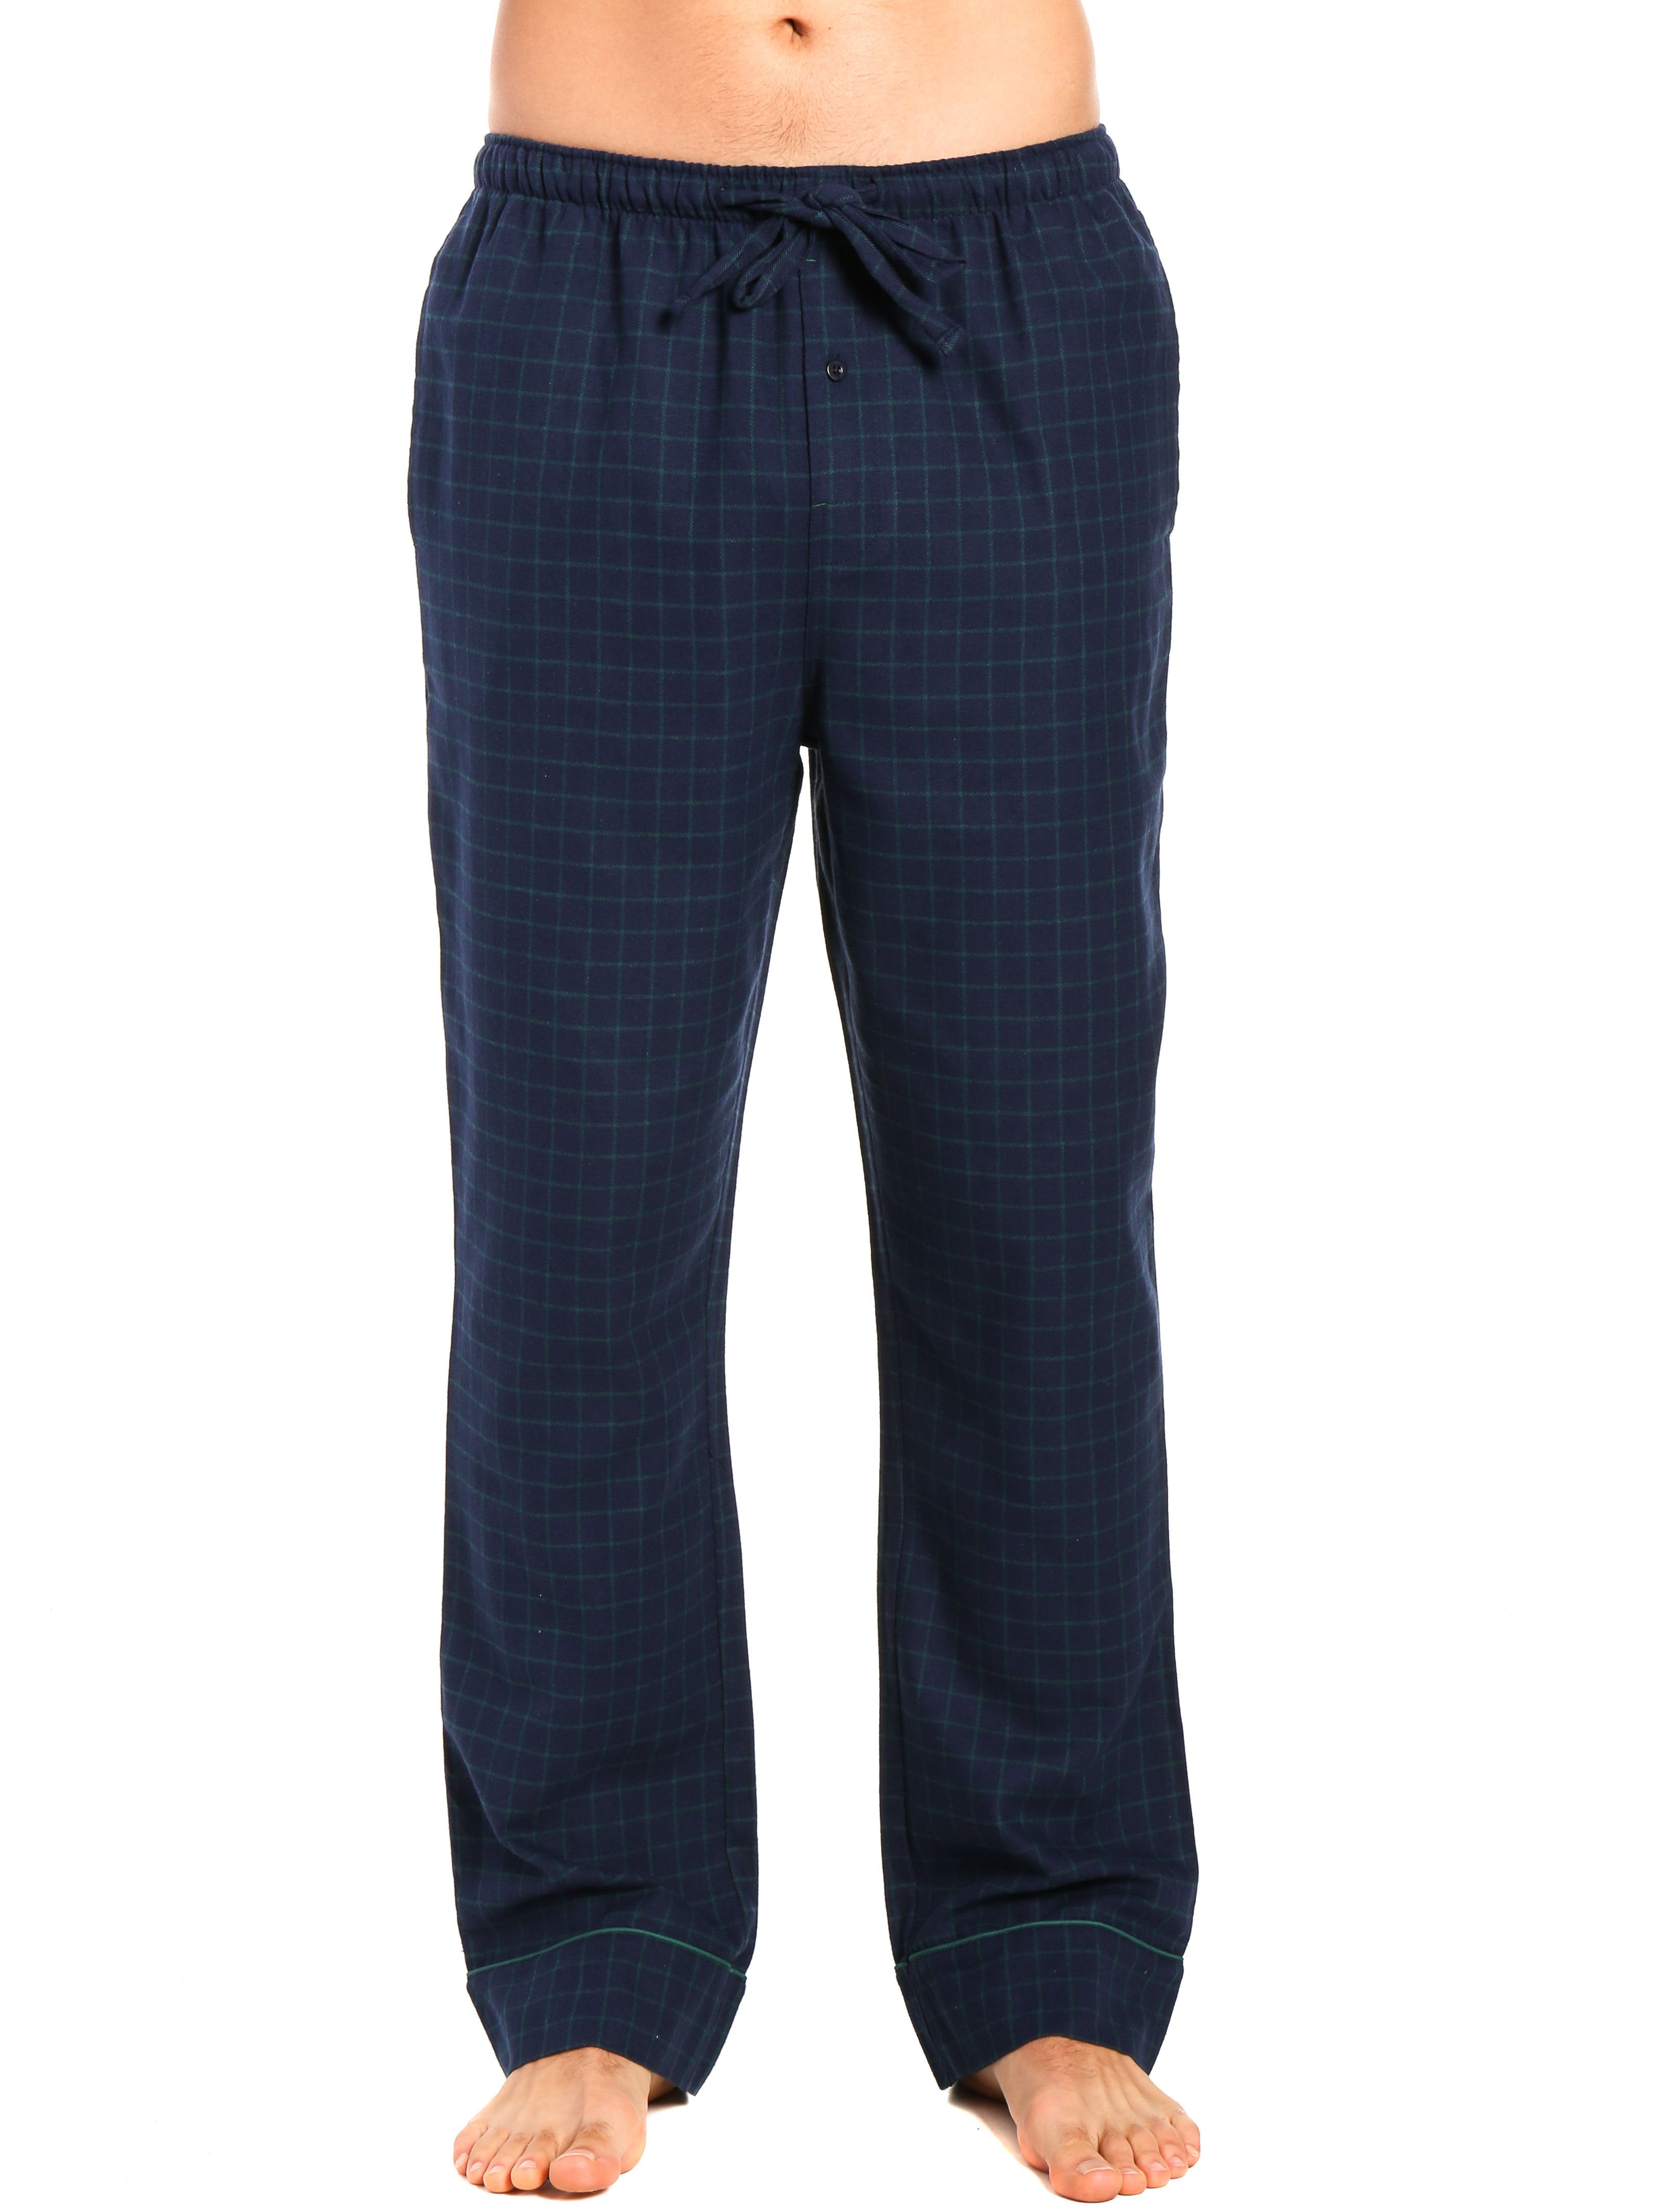 Mens Gingham 100% Cotton Flannel Lounge Pants - Windowpane Checks - Navy Green